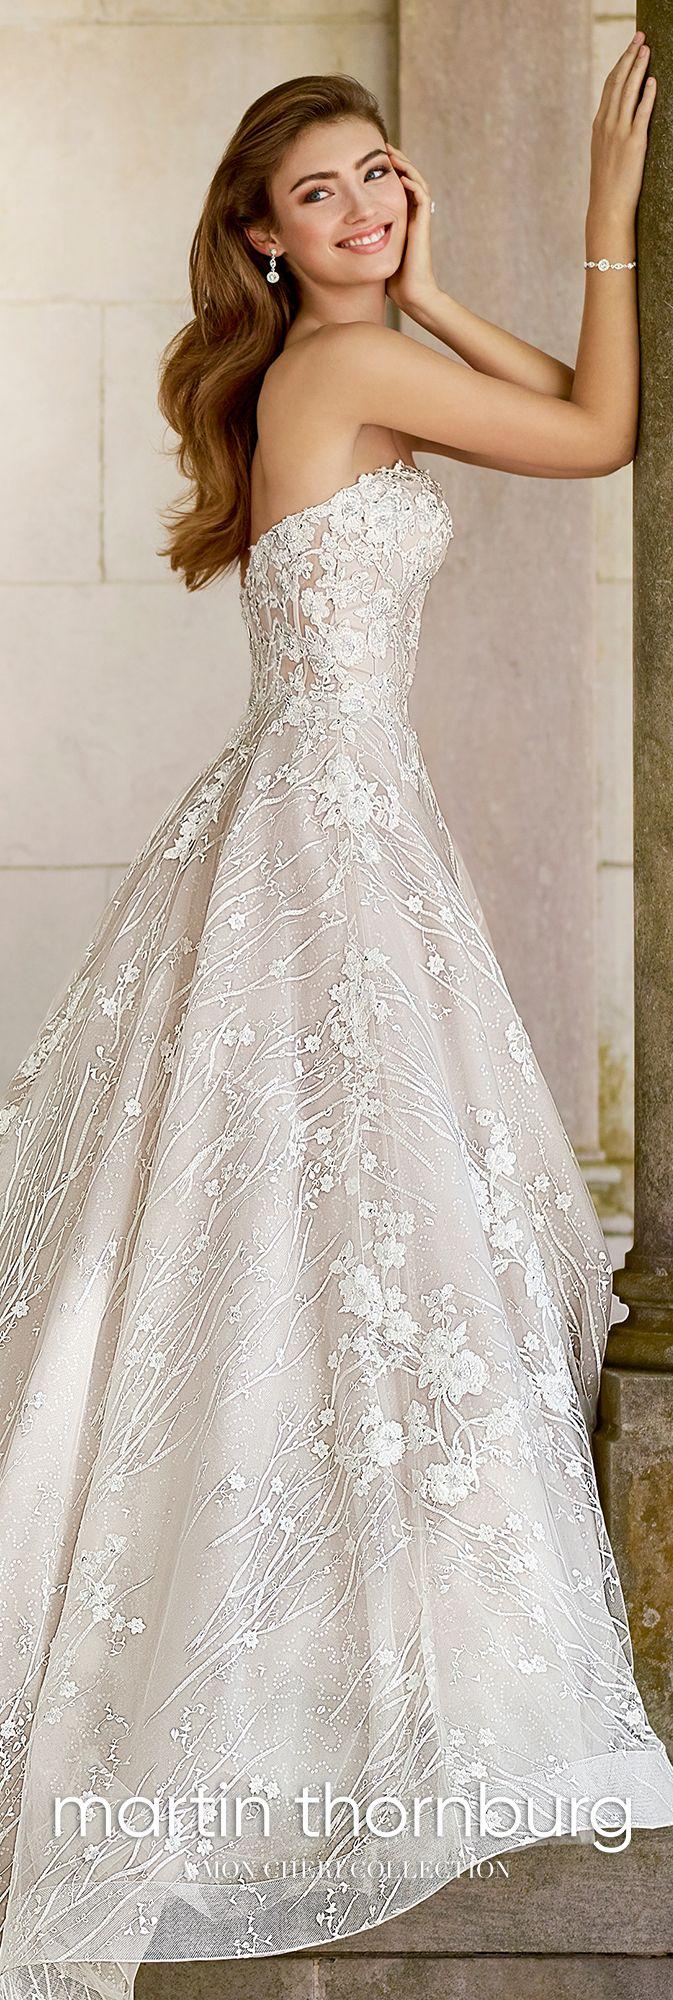 Wedding - Strapless Sweetheart Lace Wedding Gown - 118281 Coda